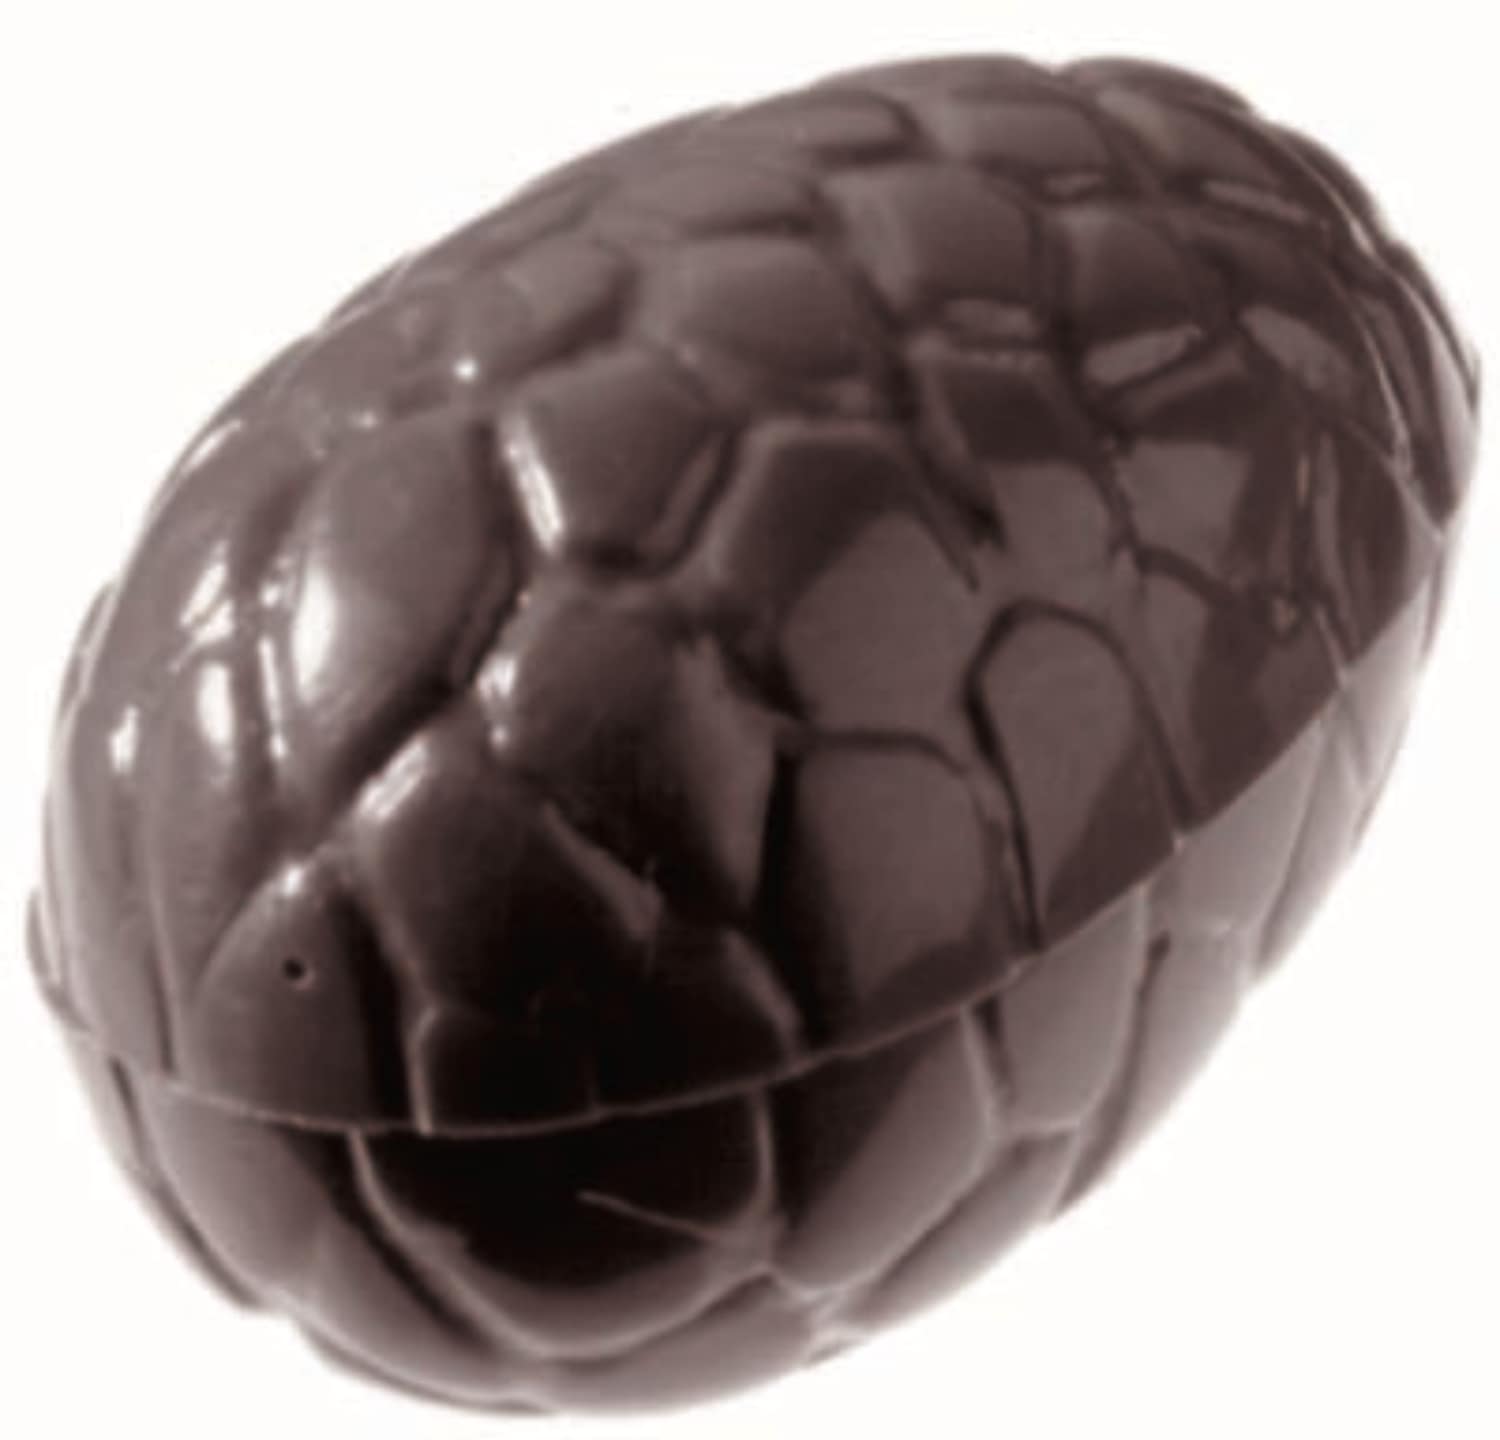 Schokoladenform "Osterei" 421383